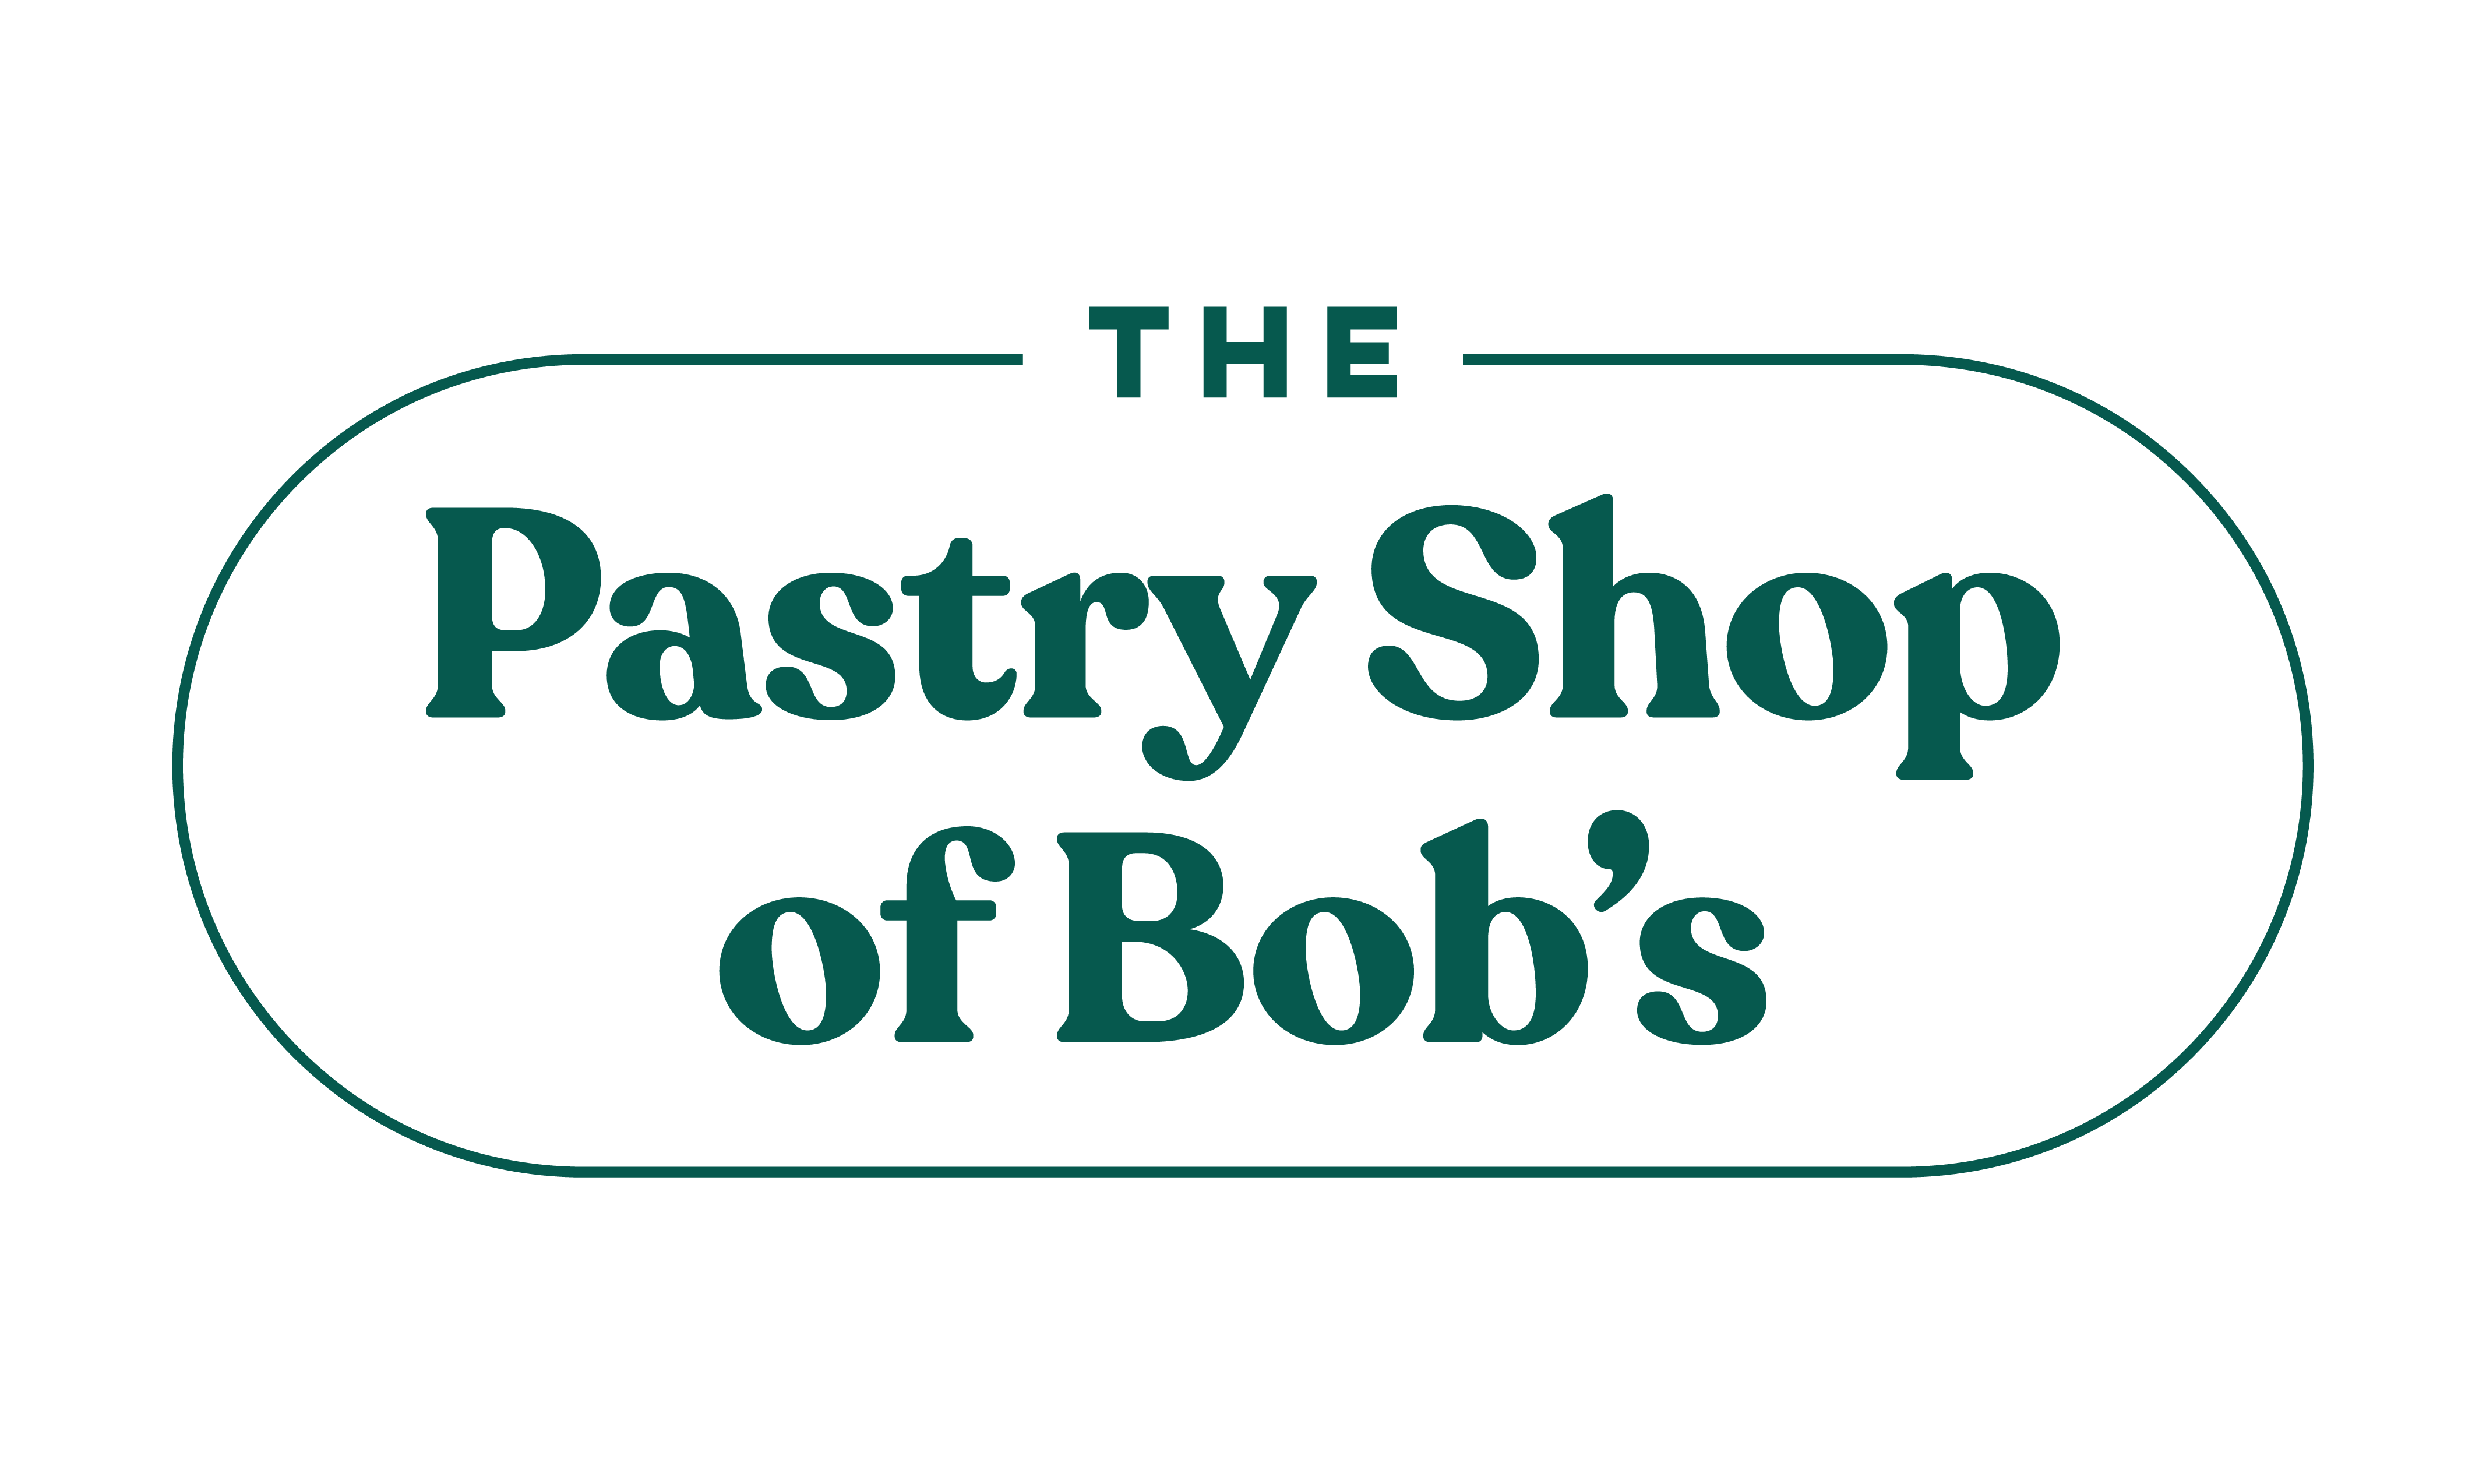 Pastry Shop of Bob's